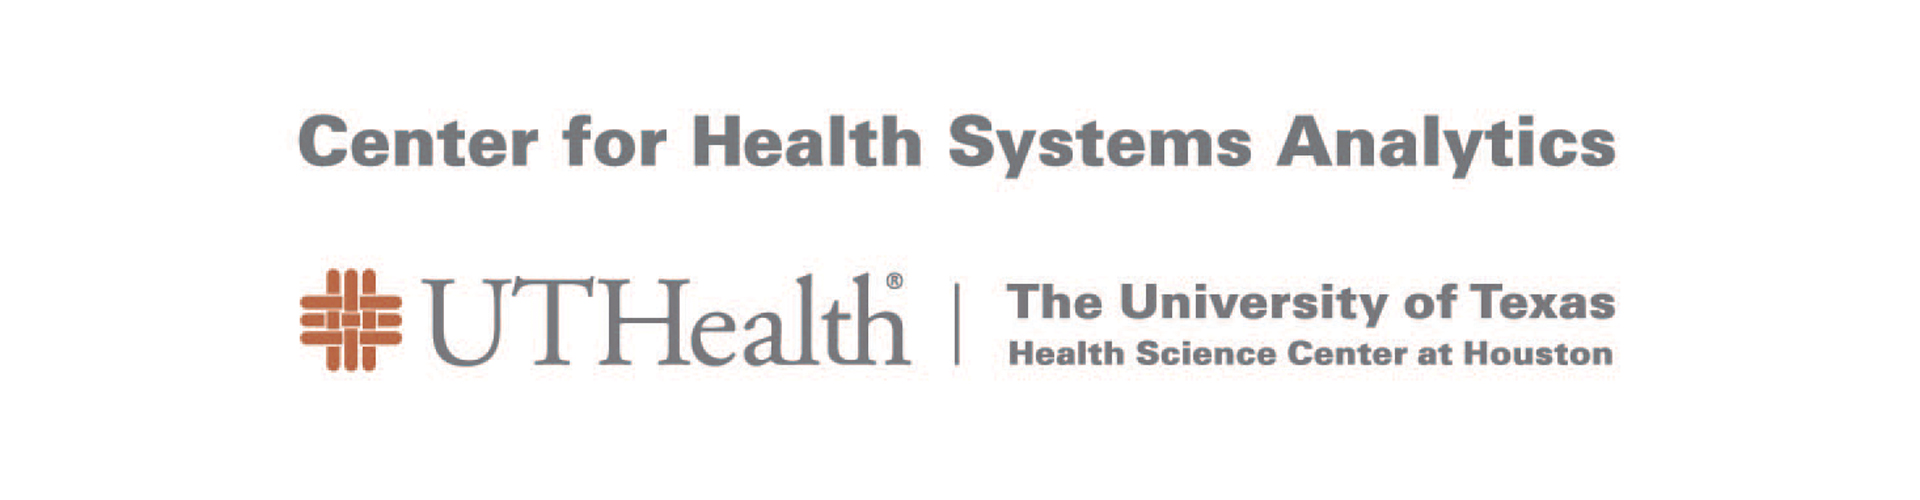 UTHealth Center for Health Systems Analytics Logo